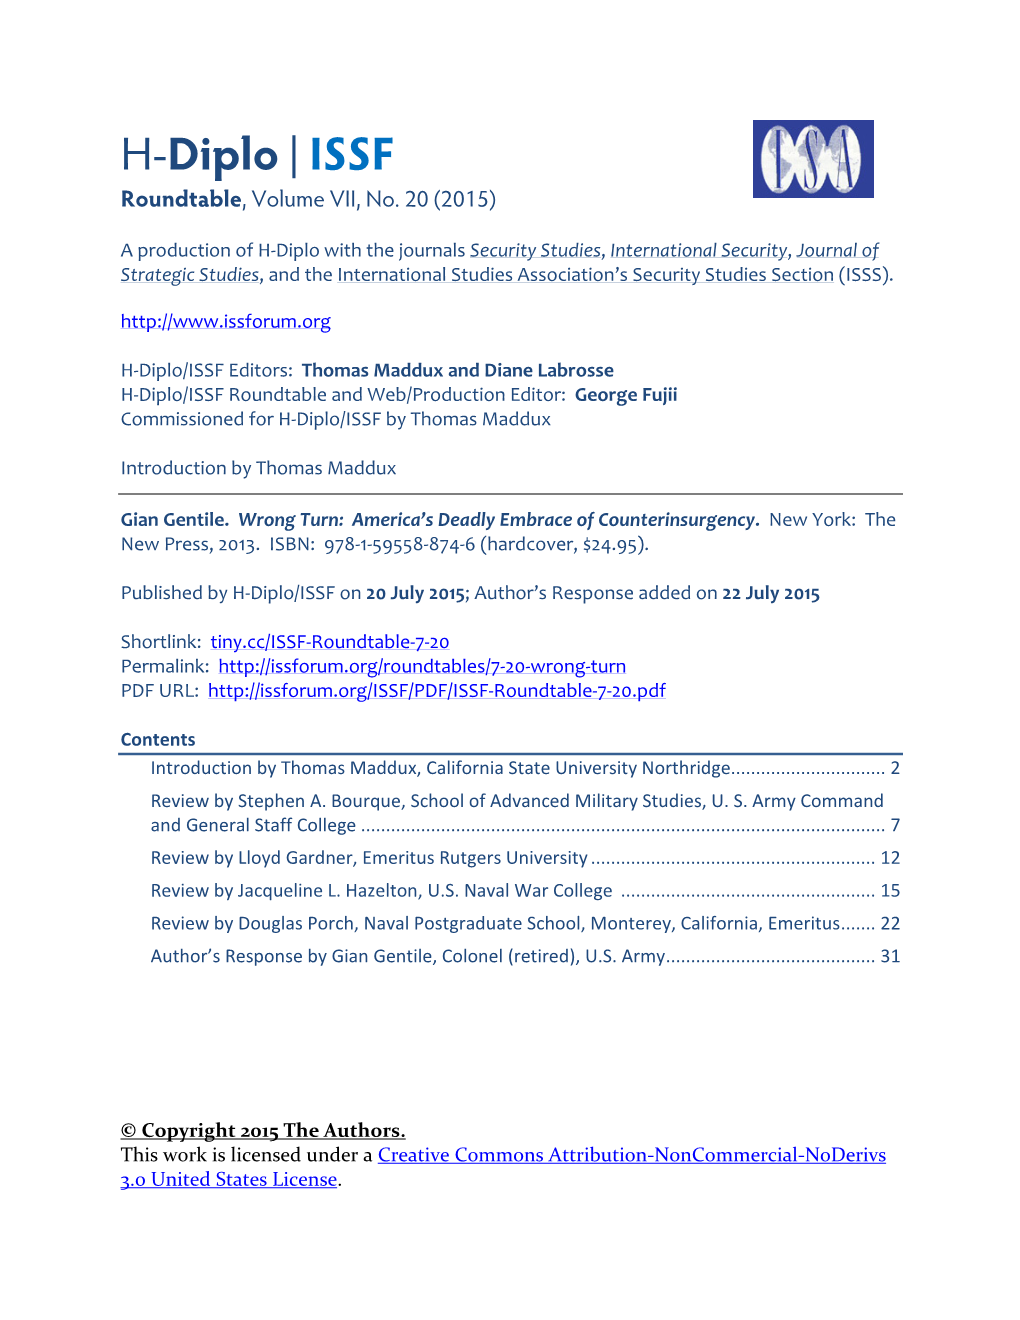 H-Diplo | ISSF Roundtable, Volume VII, No